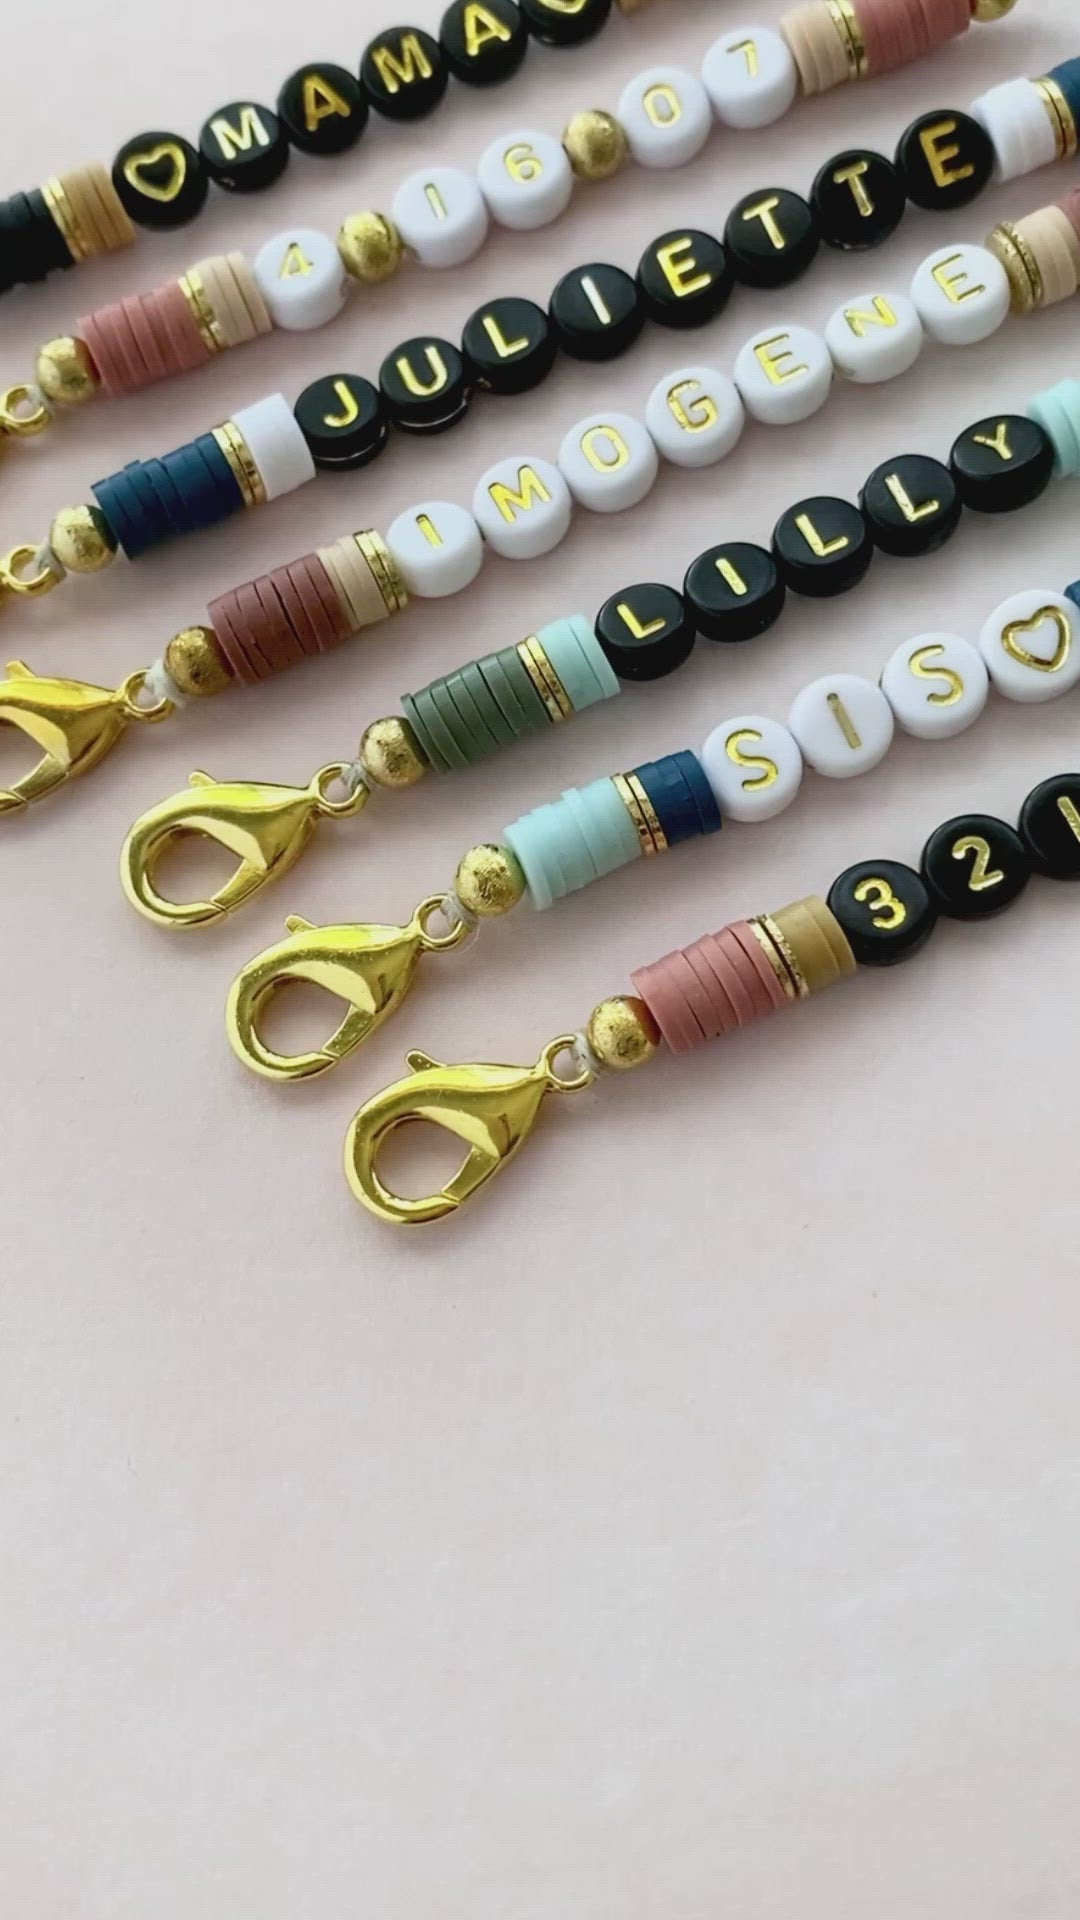 Letters Beads, Letter Beads, Small Letter Beads Letter Bead Kit Necklaces  Key Chains For DIY Crafts Bracelets 